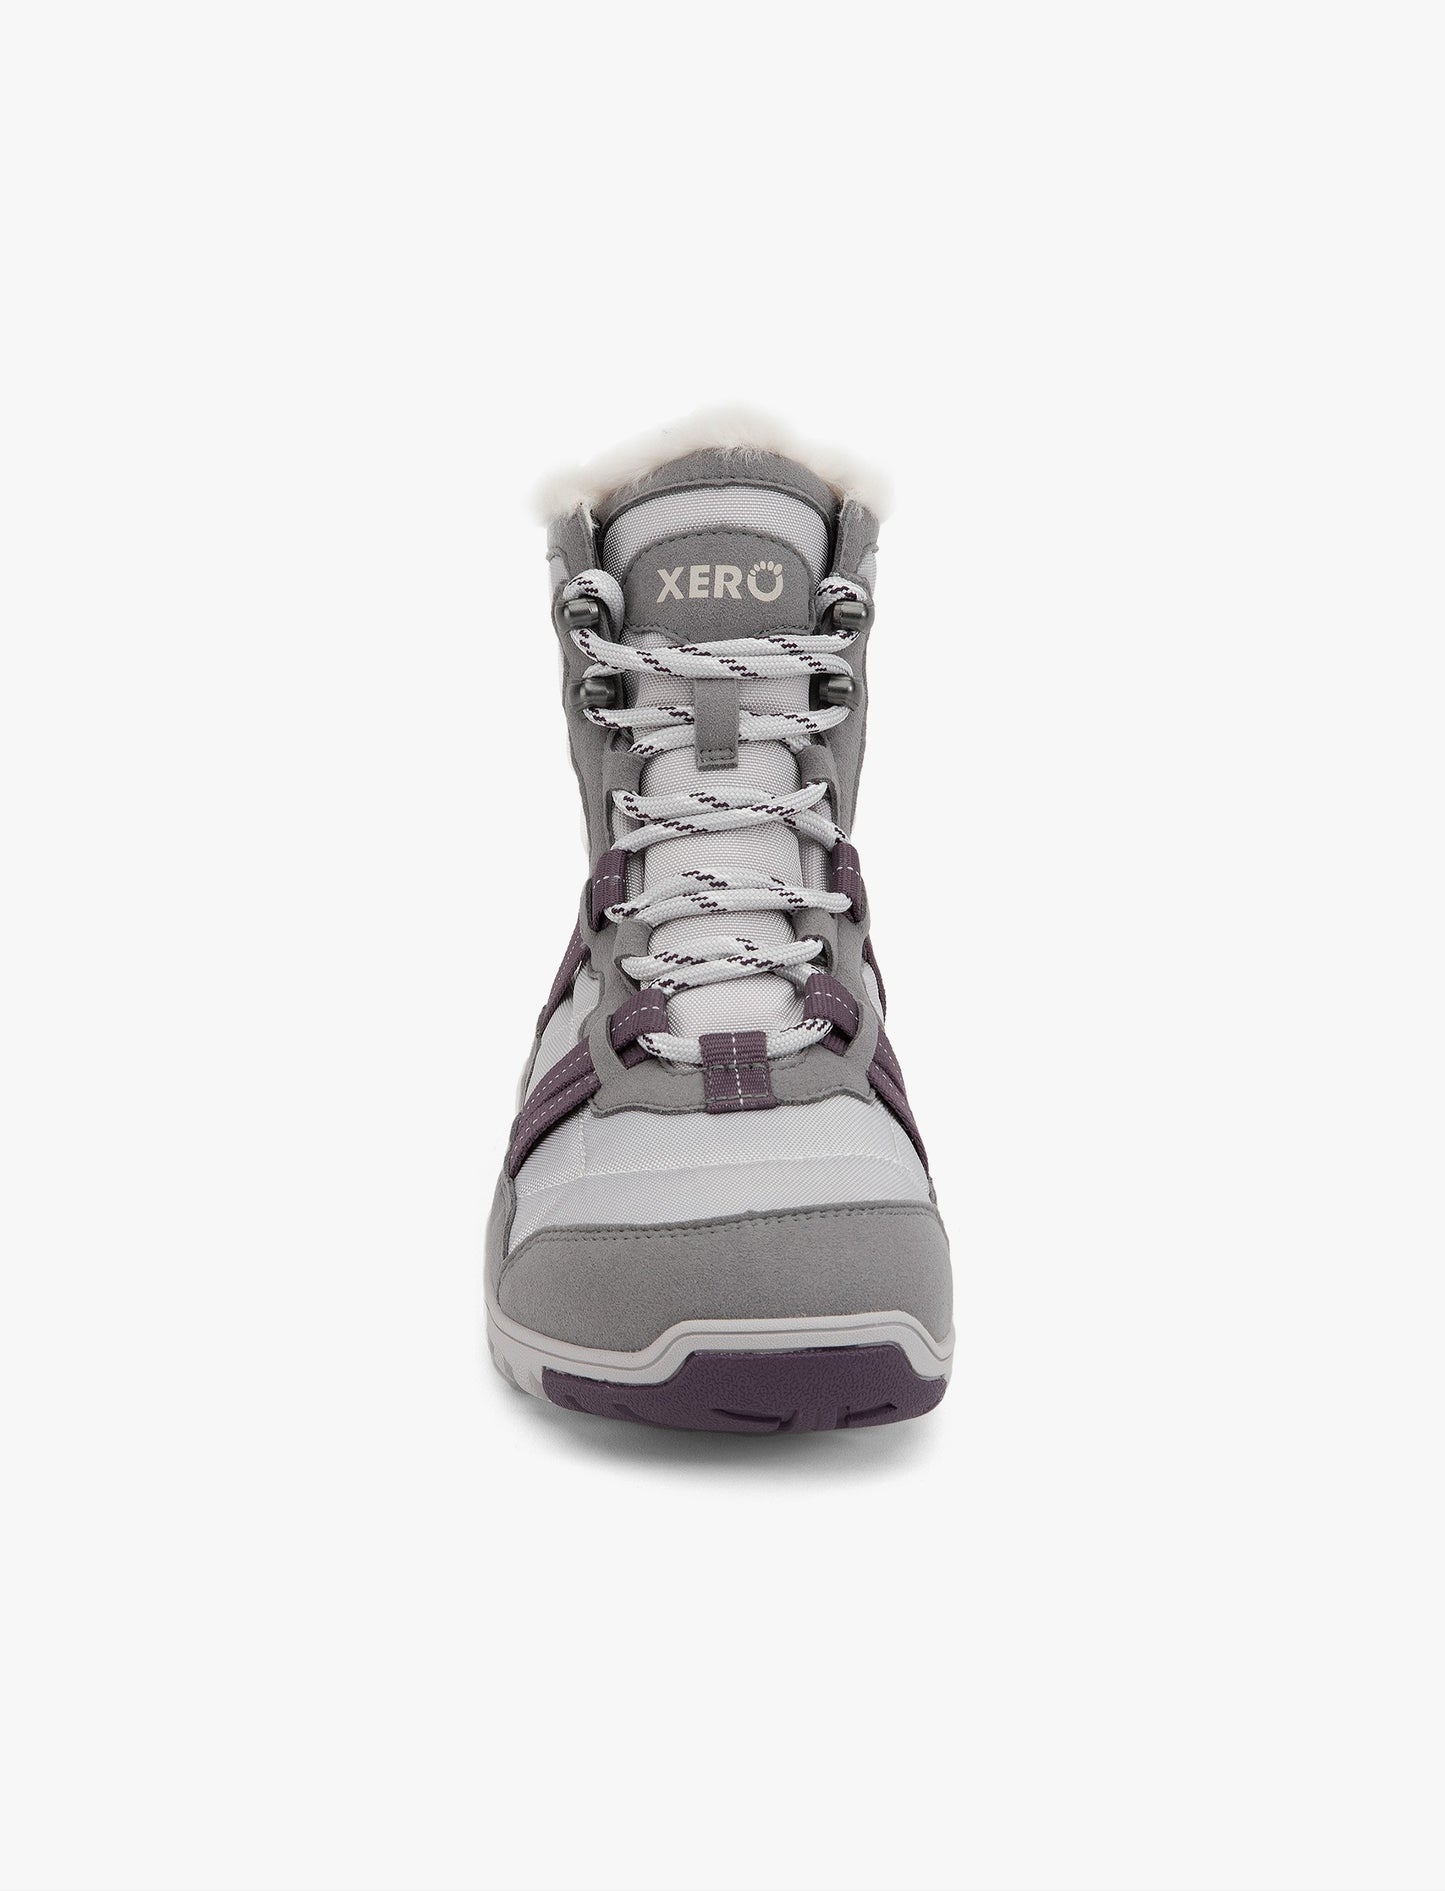 Xero Alpine - נעלי הרים לנשים זרו